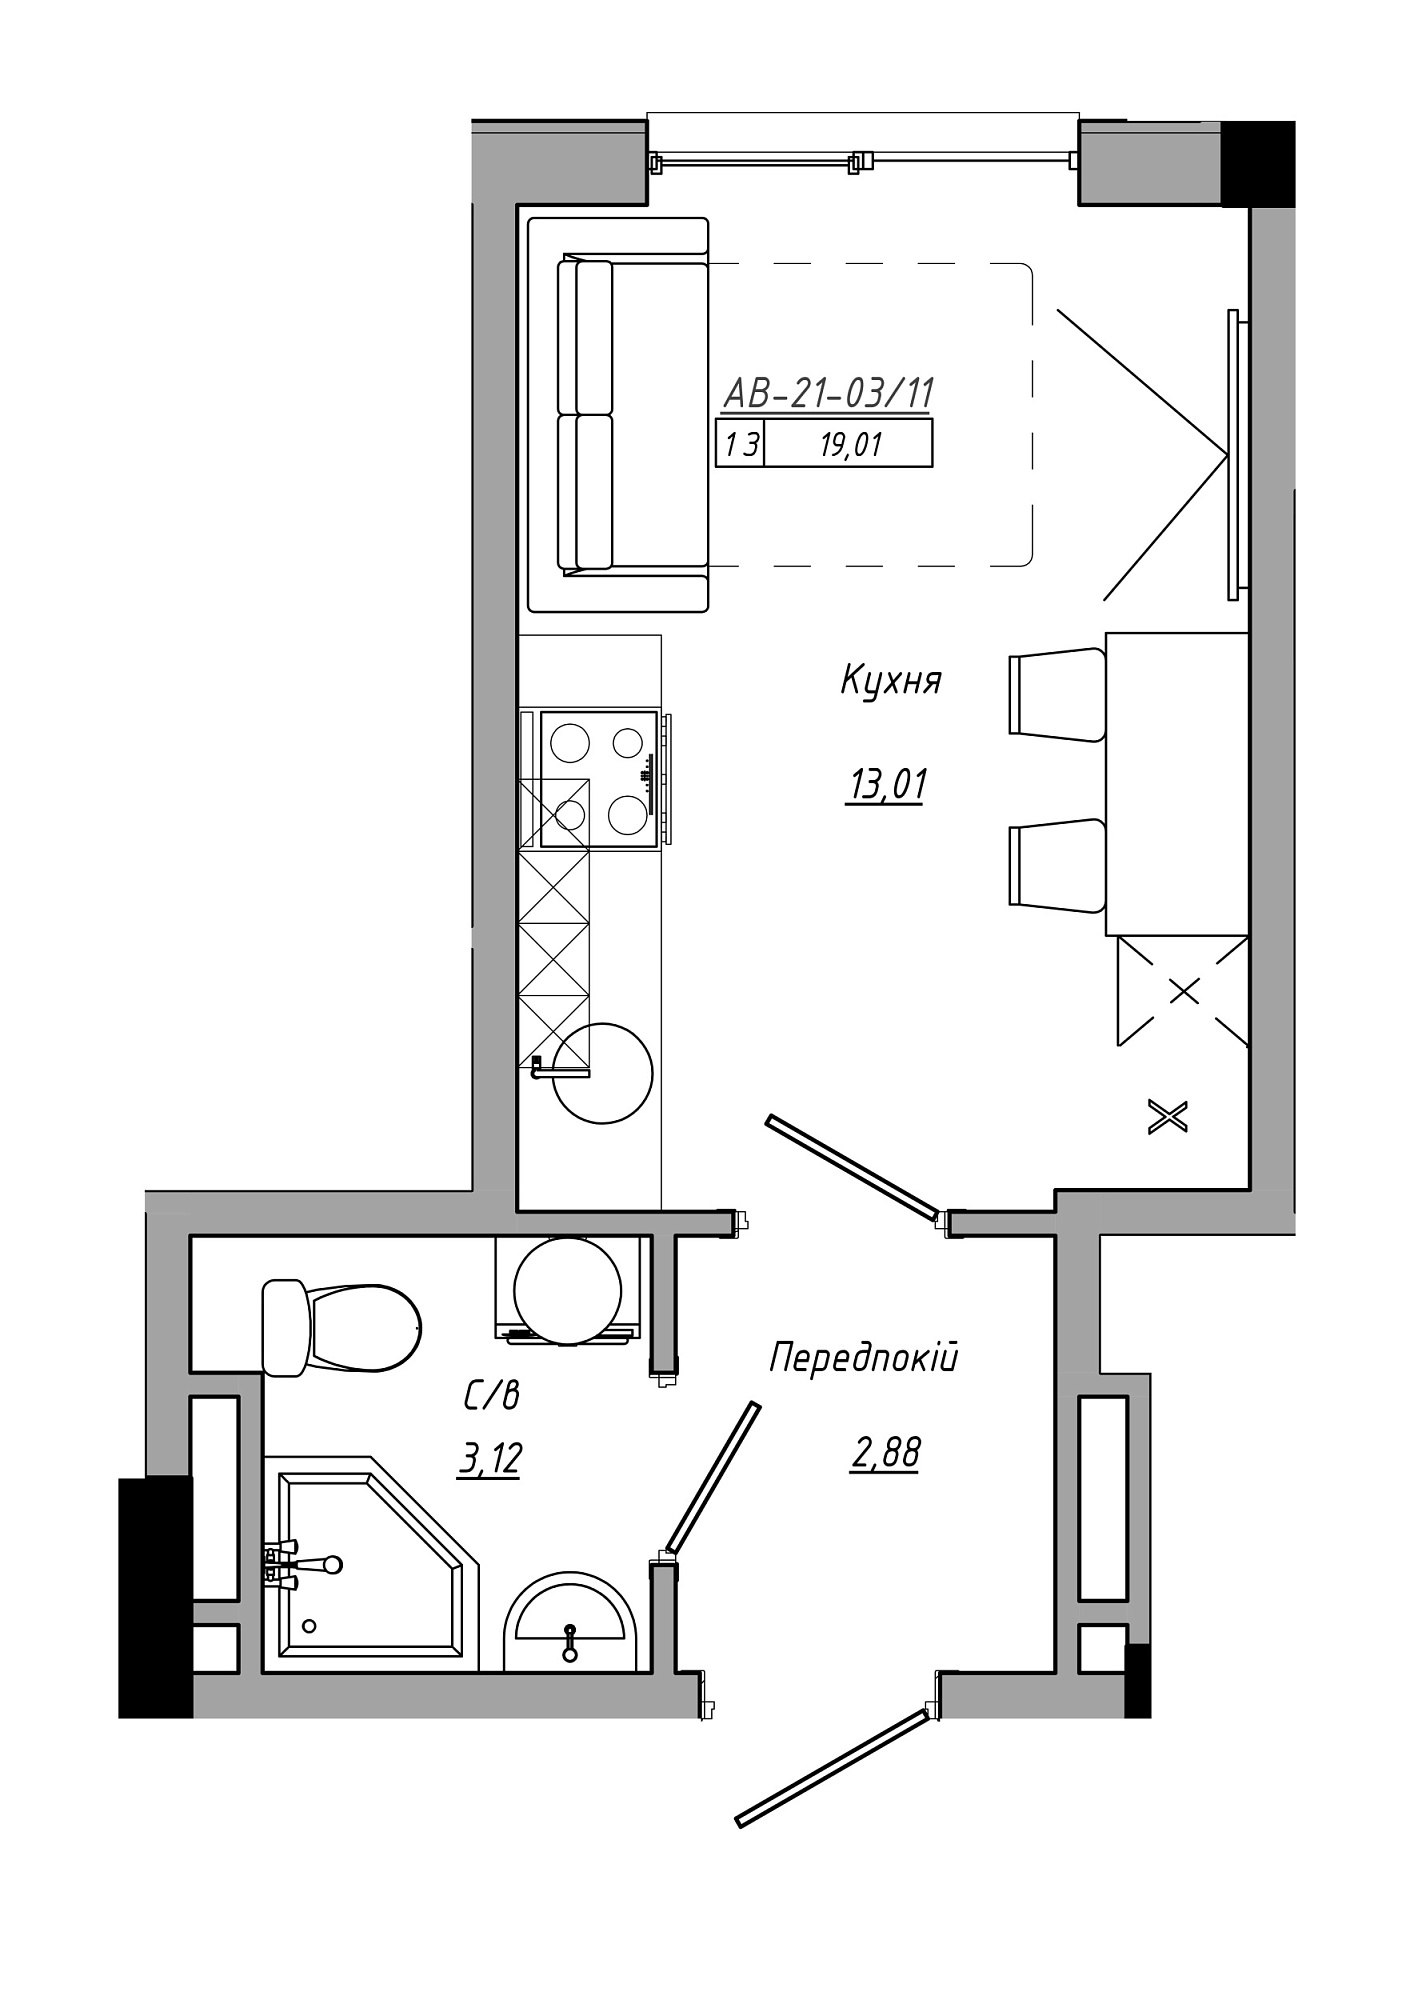 Planning Smart flats area 19.01m2, AB-21-03/00011.